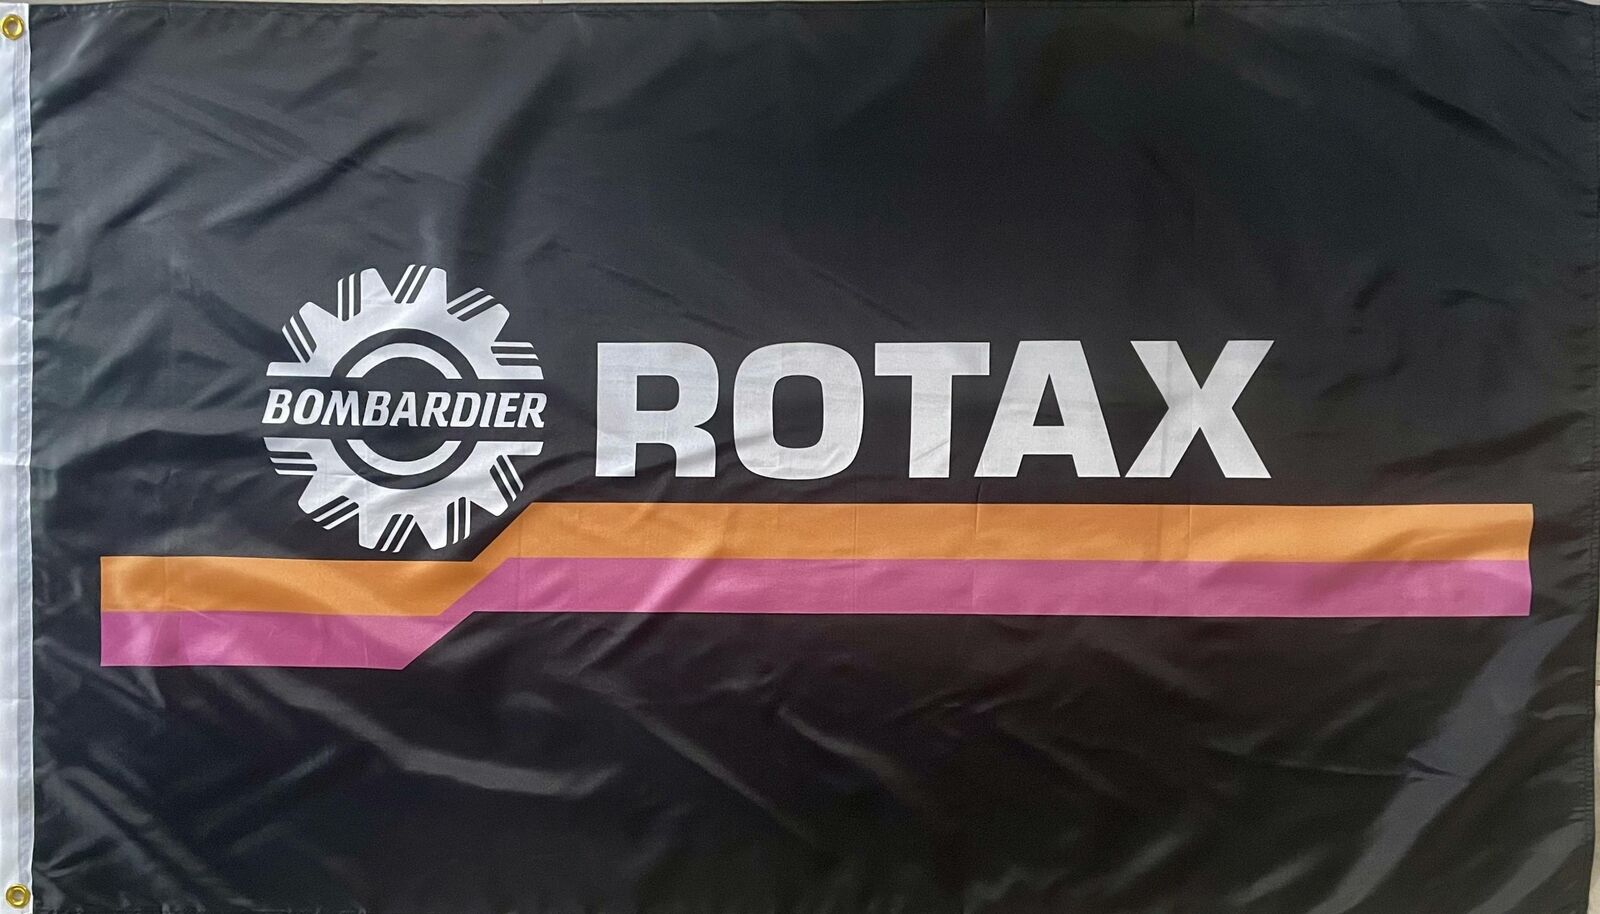 BOMBARDIER ROTAX SNOWMOBILES 3x5ft FLAG BANNER MAN CAVE GARAGE